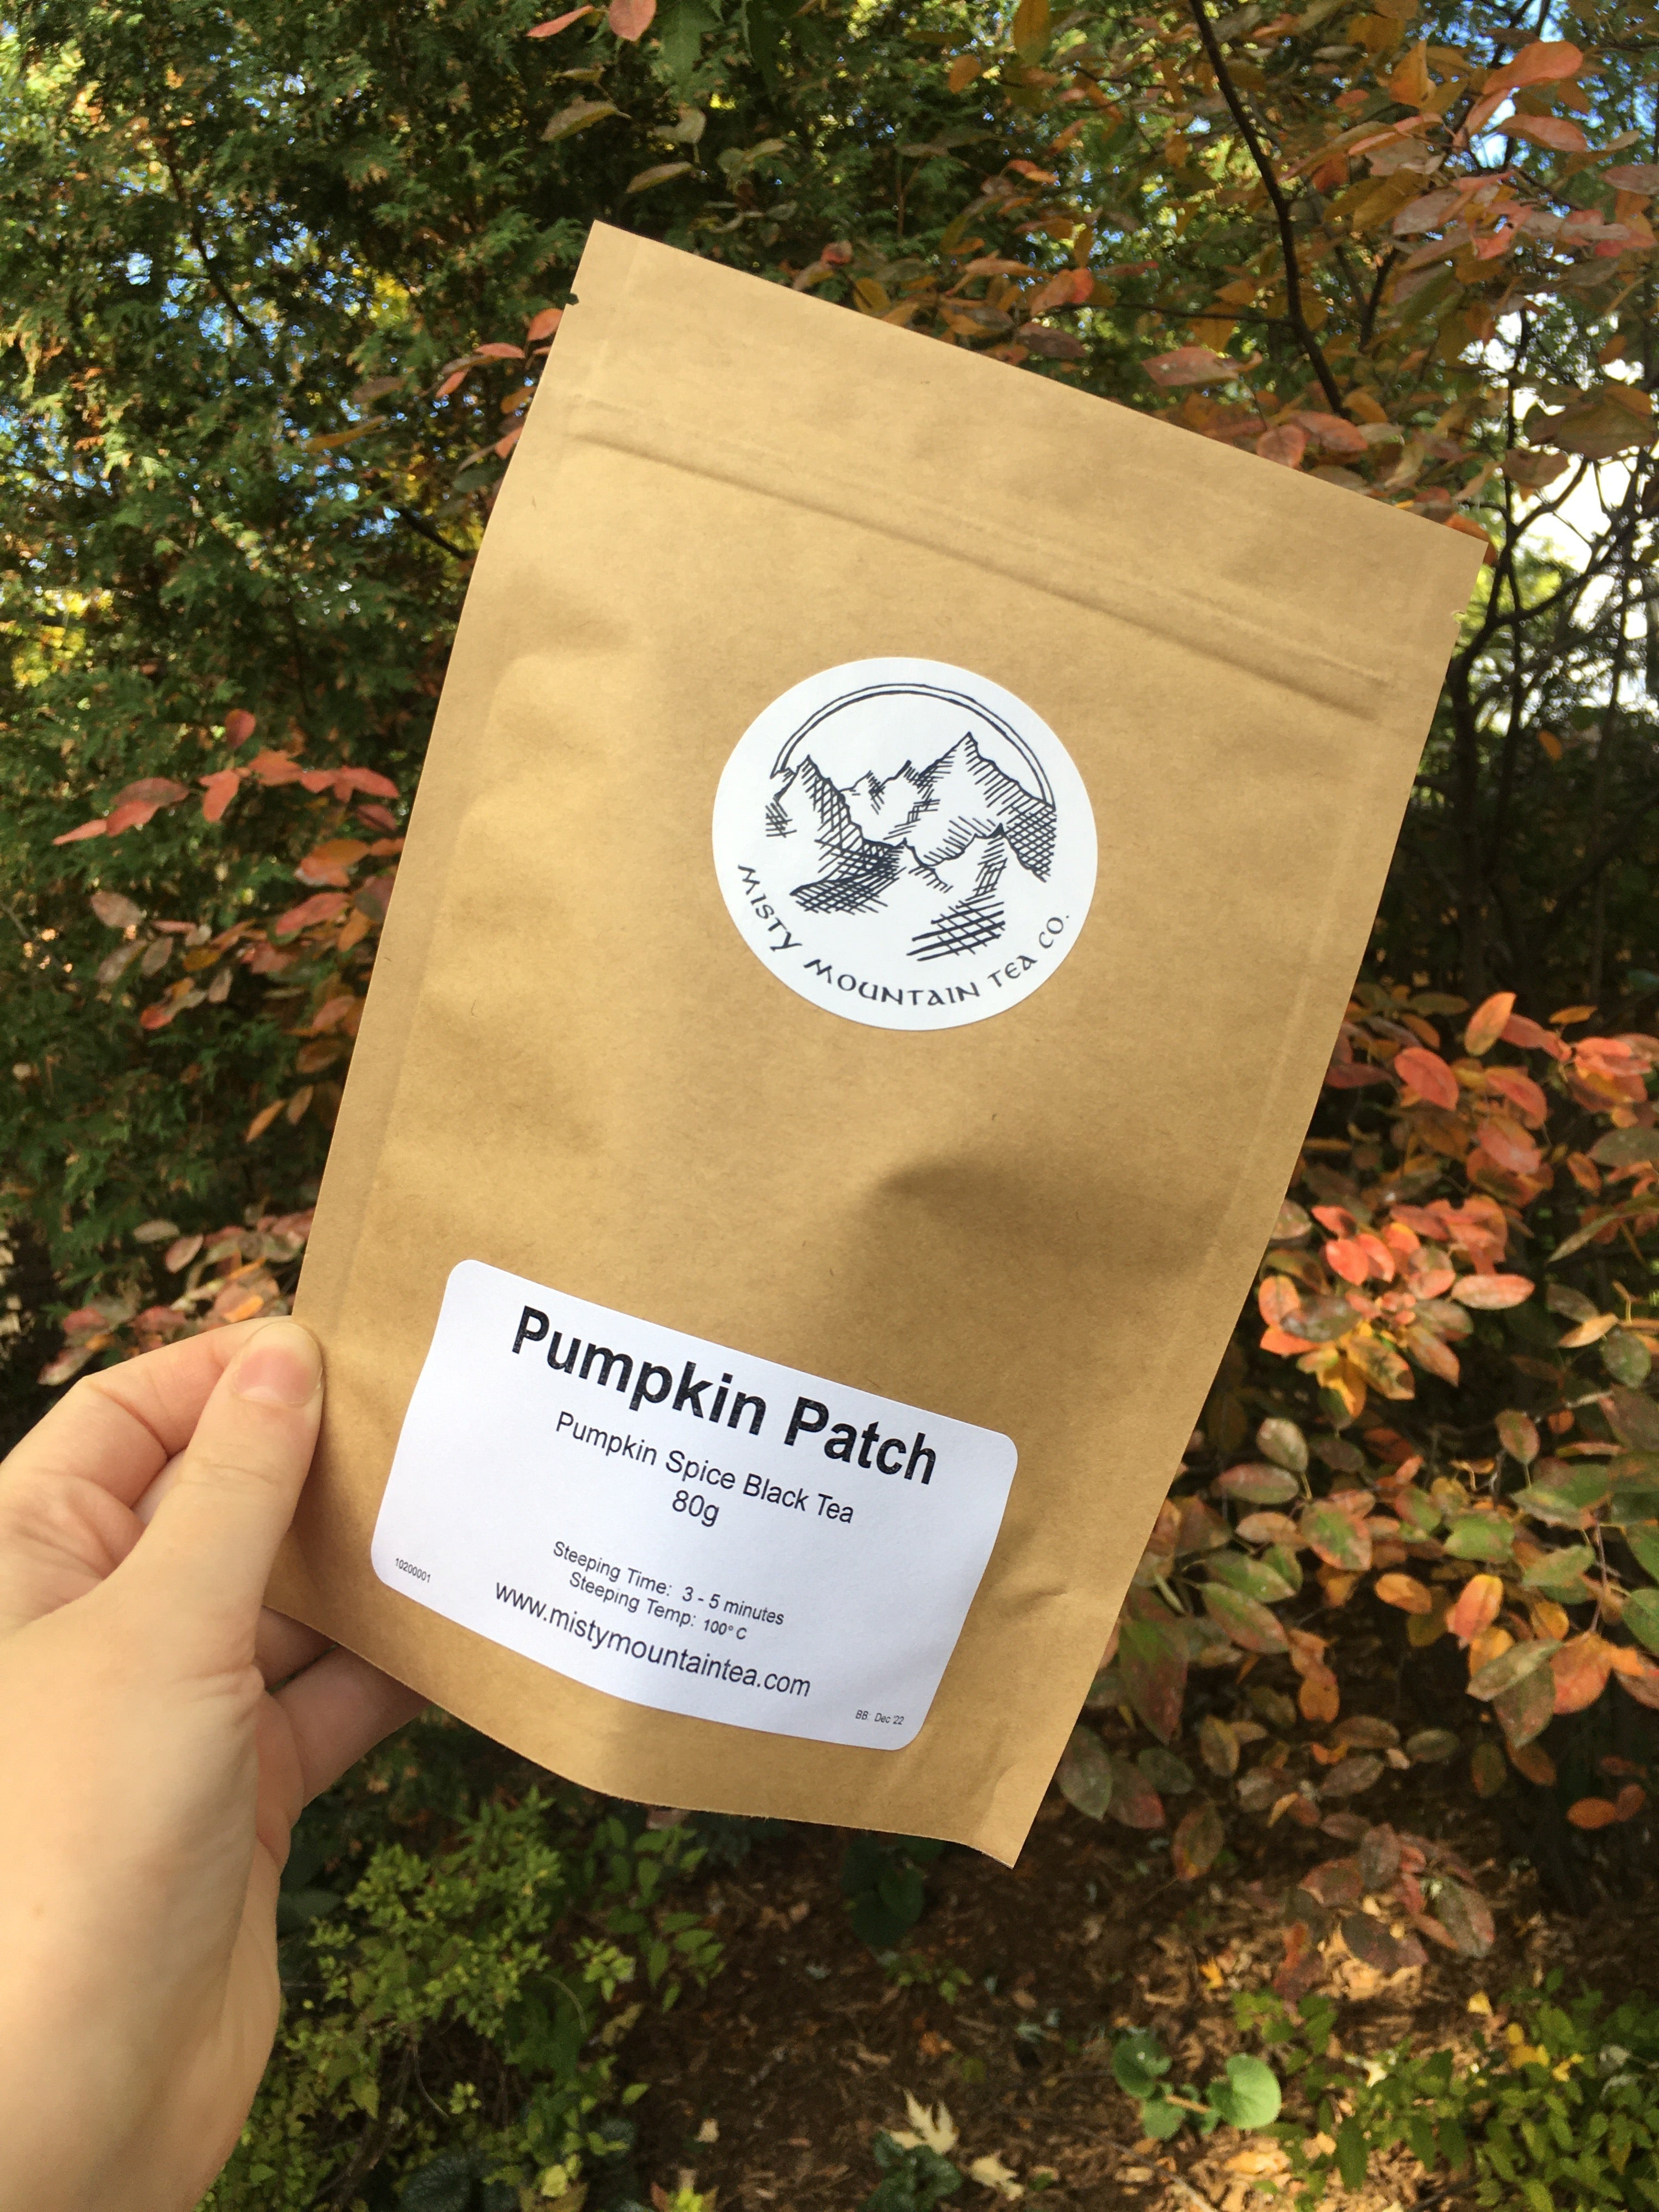 Pumpkin Patch - Pumpkin Spice Black Tea